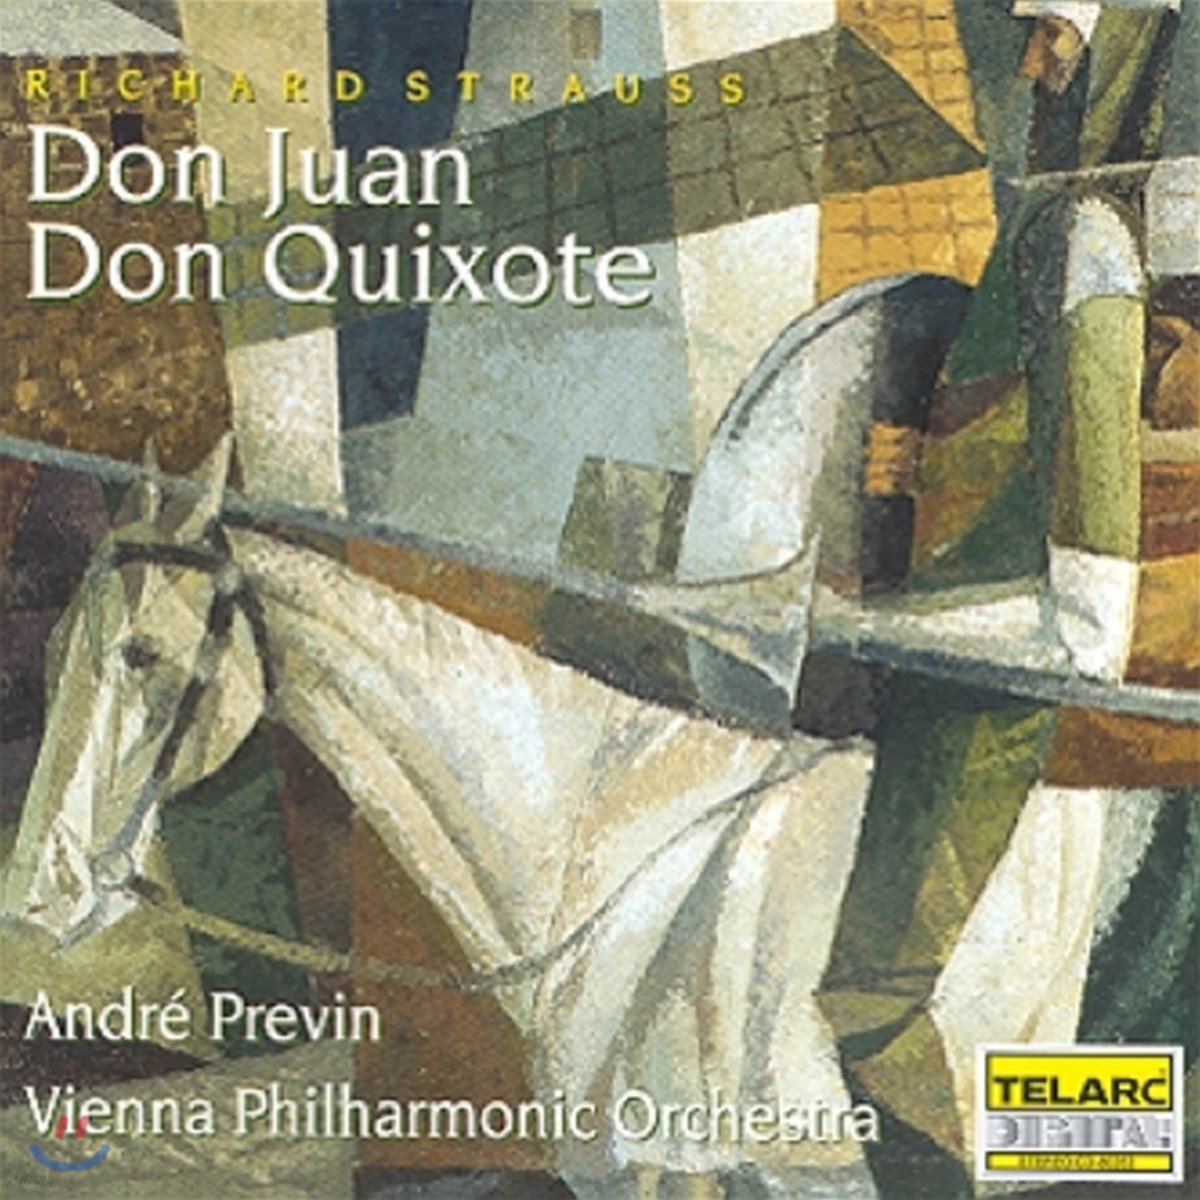 Andre Previn 슈트라우스: 돈 후앙, 돈 키호테 (R. Strauss: Don Juan, Don Quixote)